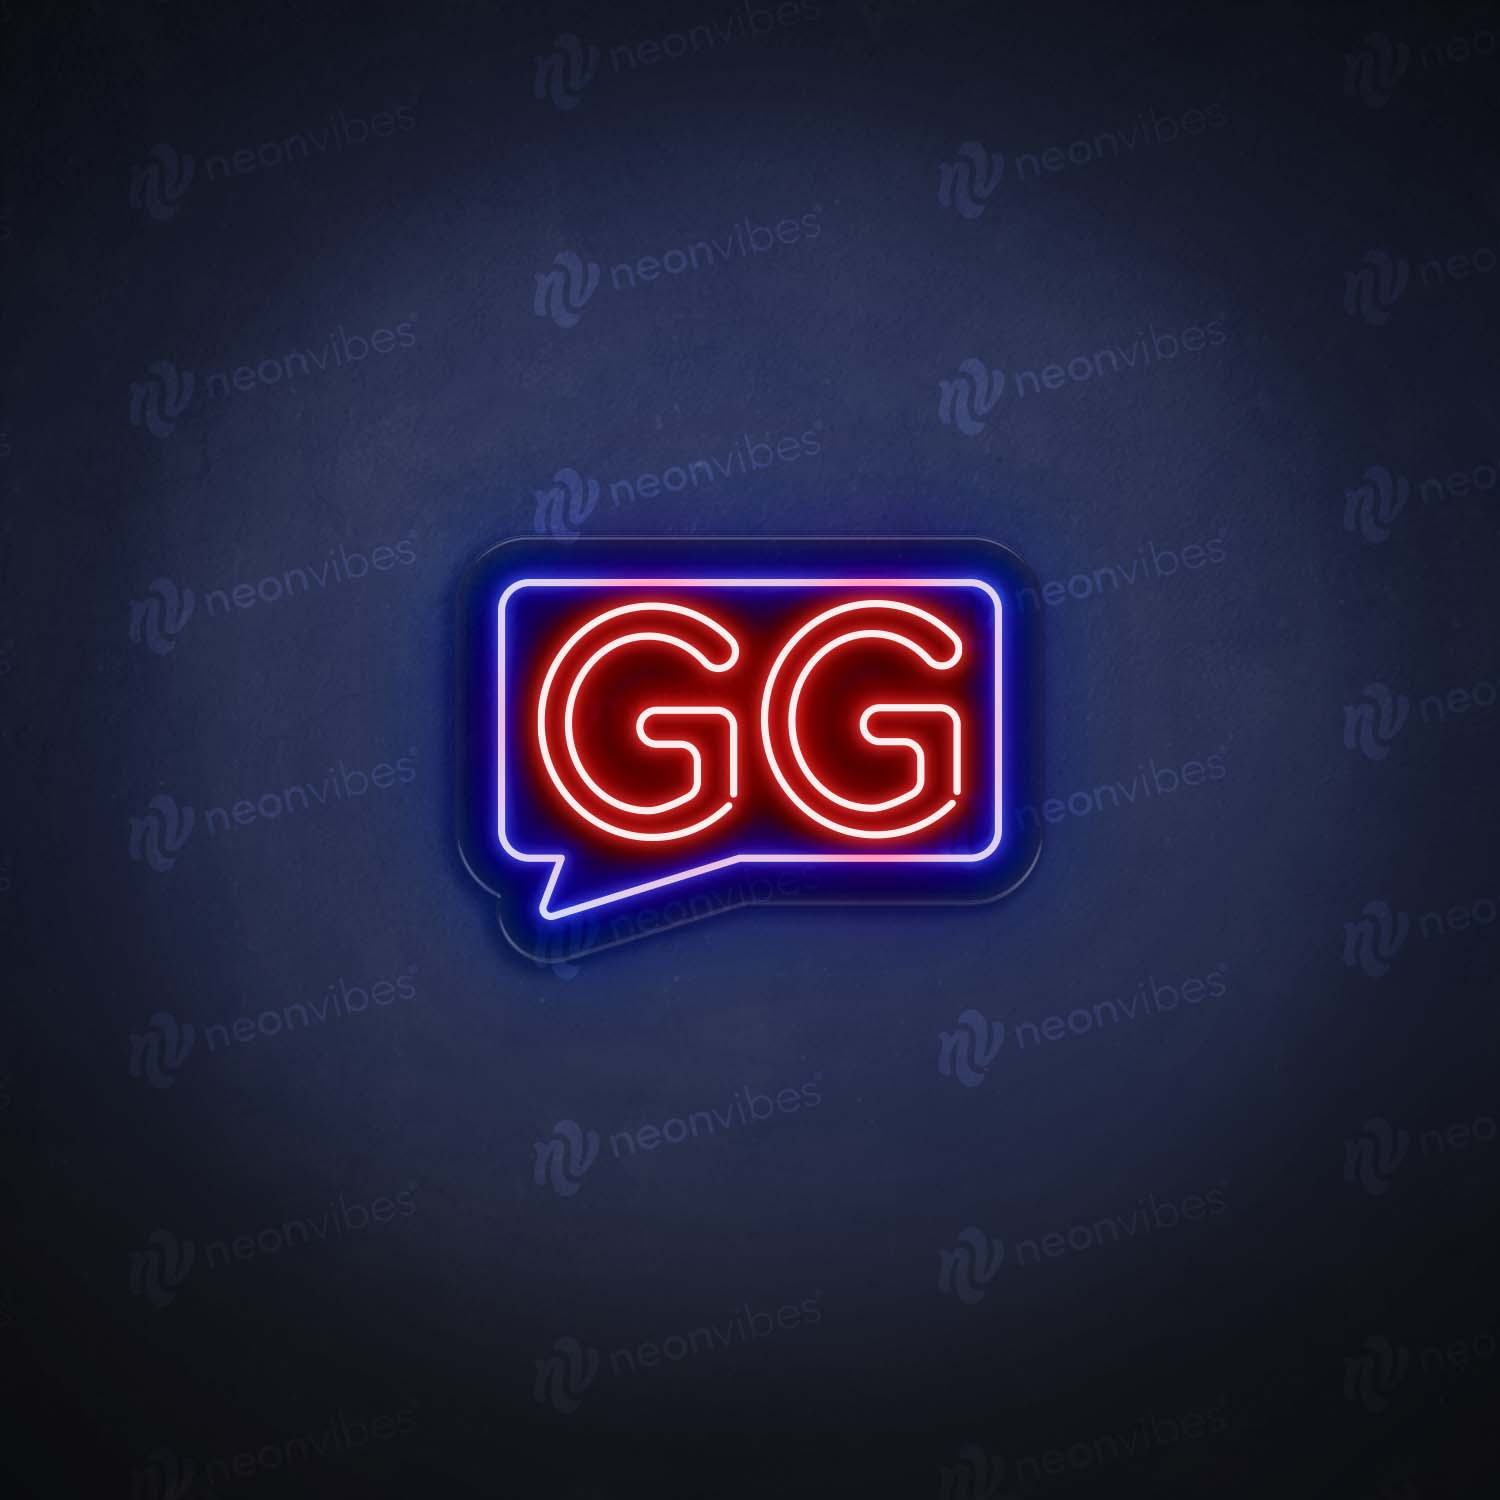 GG neon sign